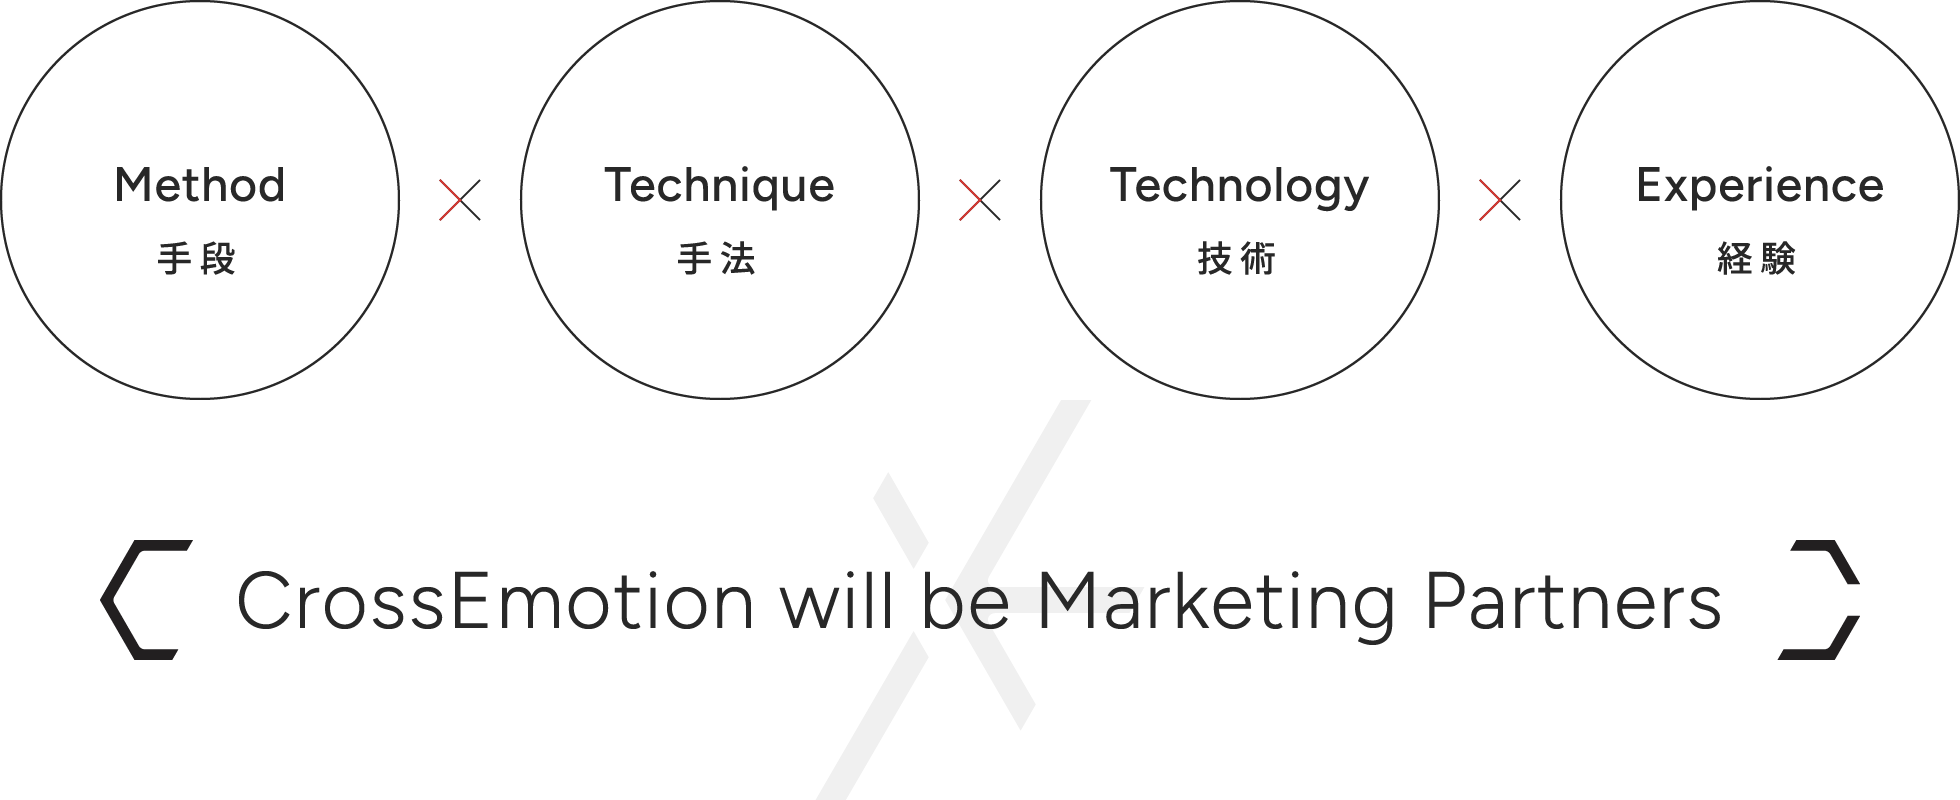 CrossEmotion will be Marketing Partners